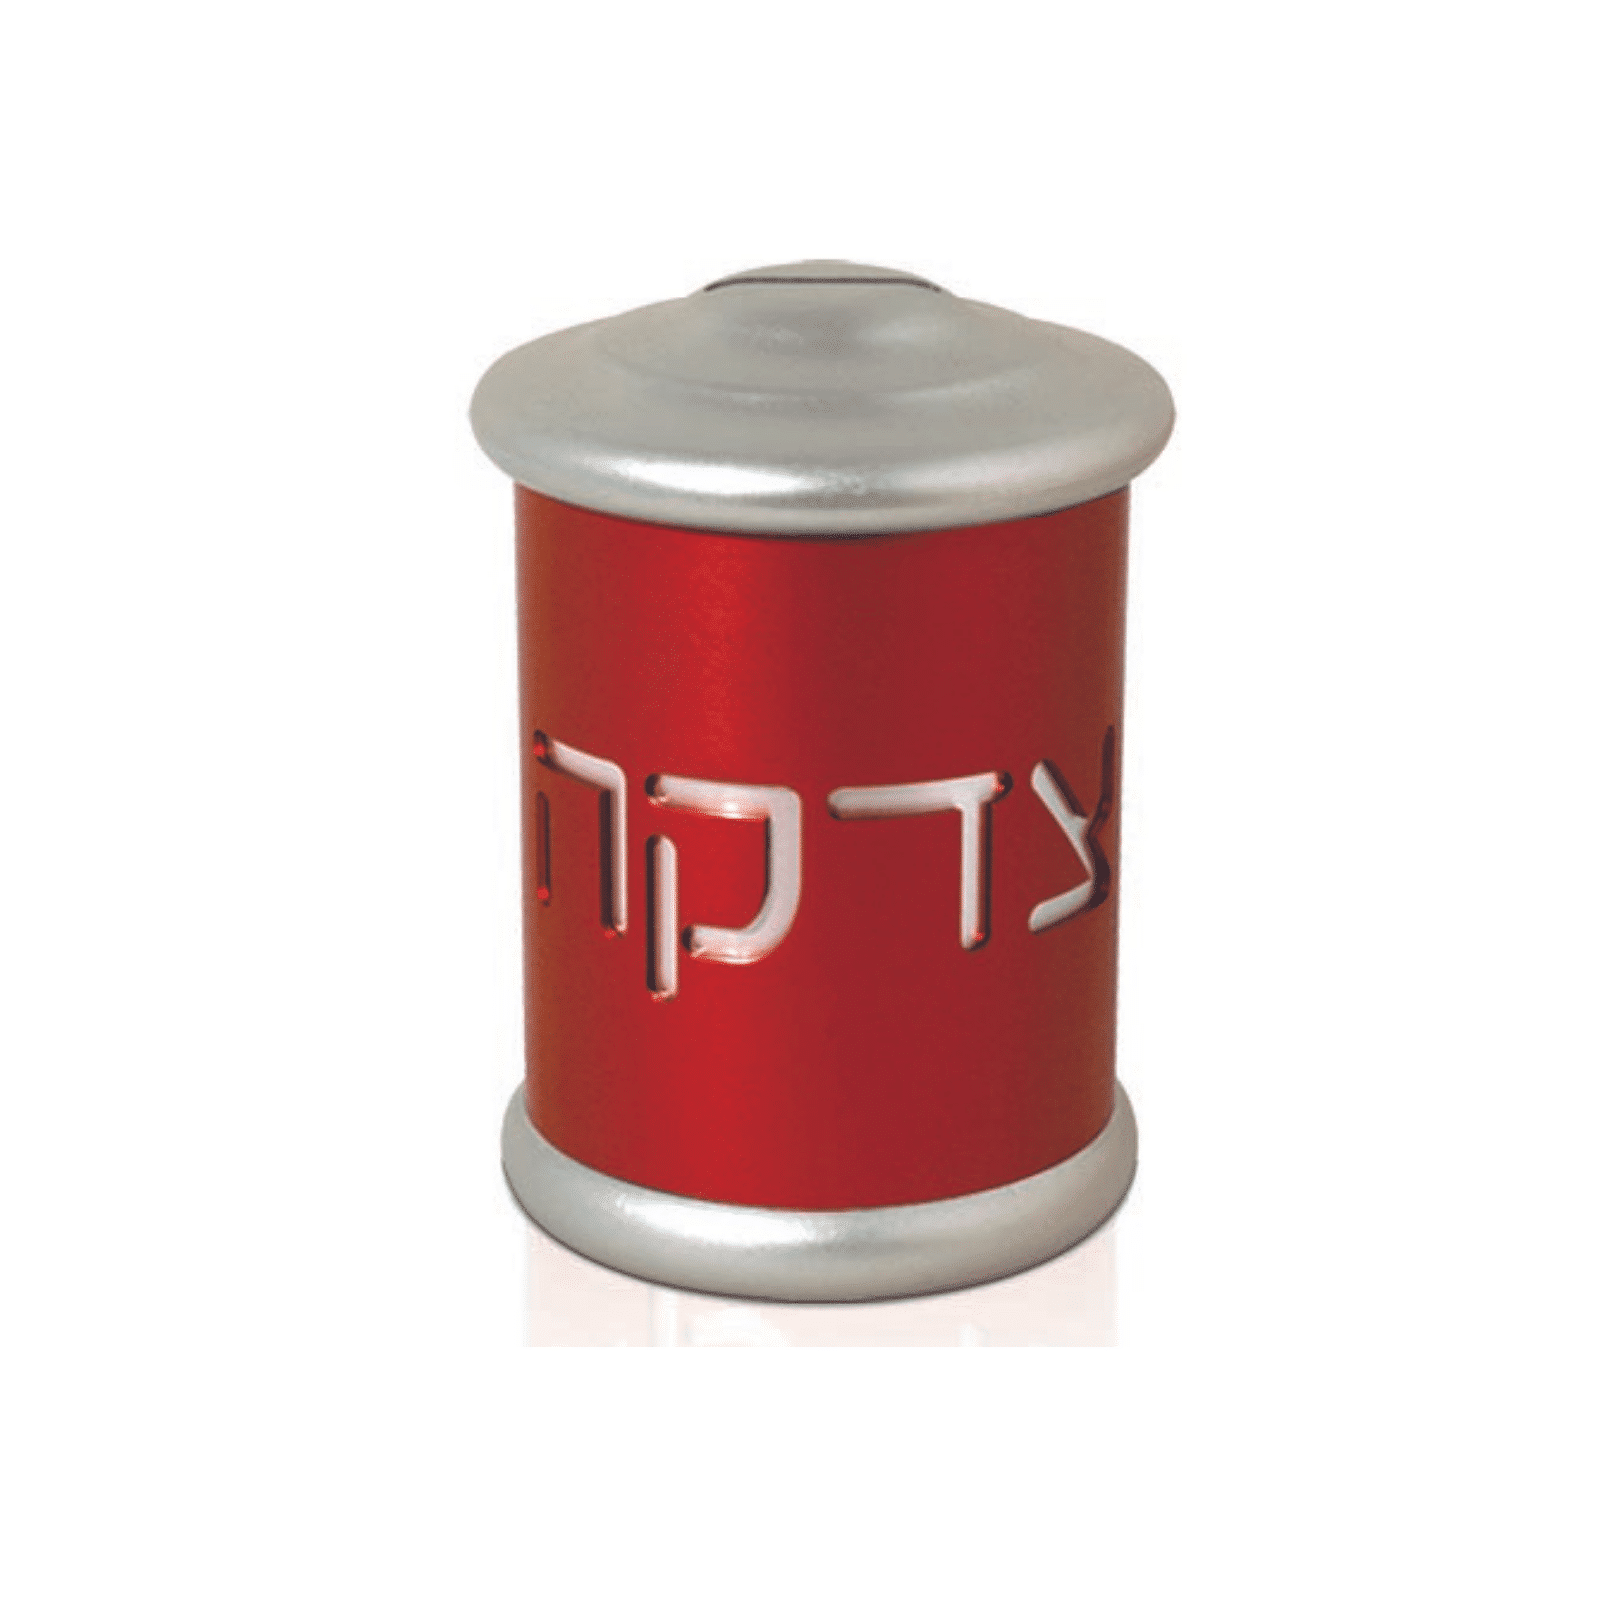 Unique Design Judaica Donation Box